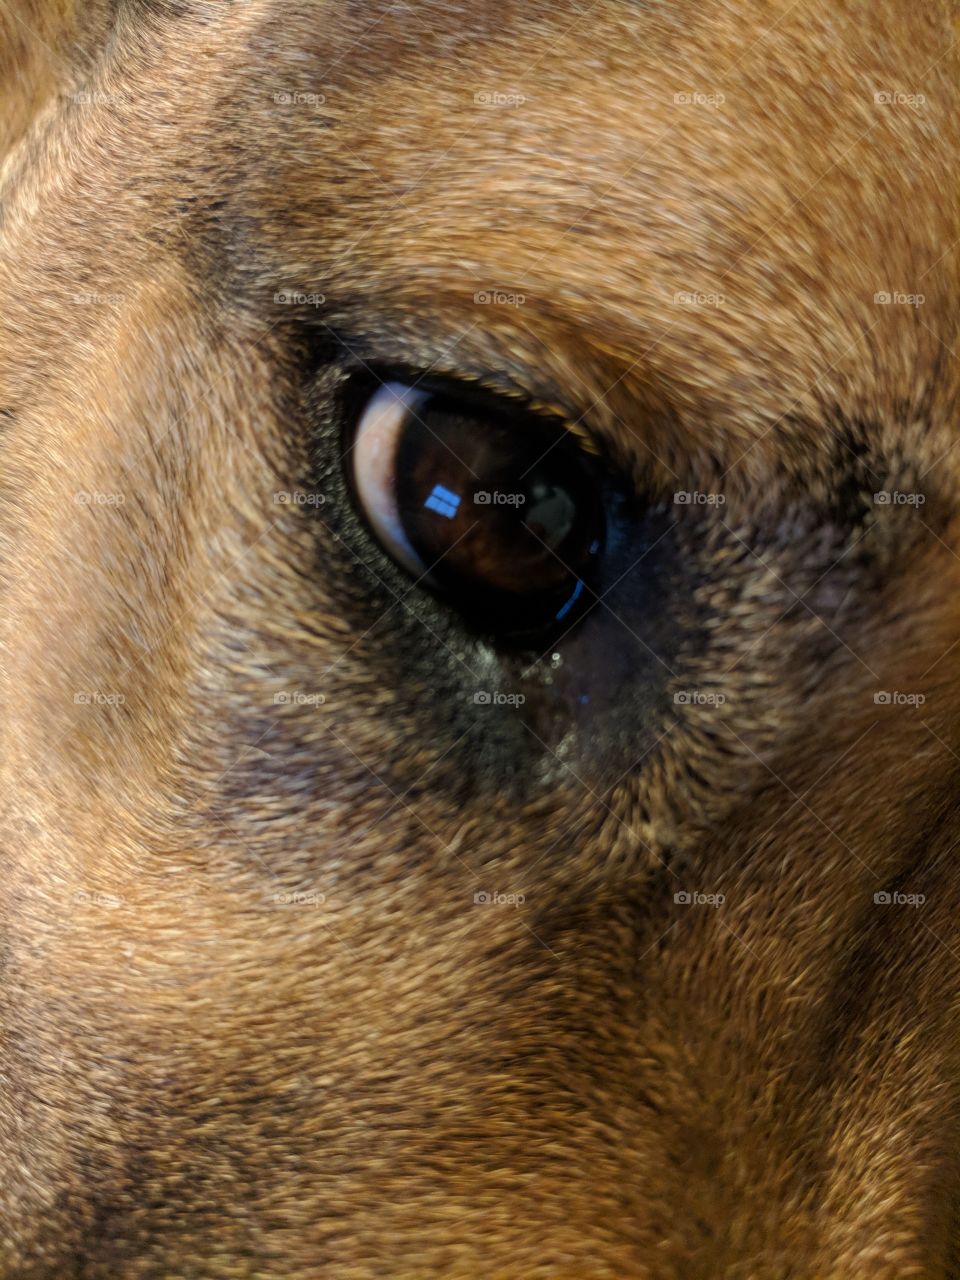 Dogs Eye